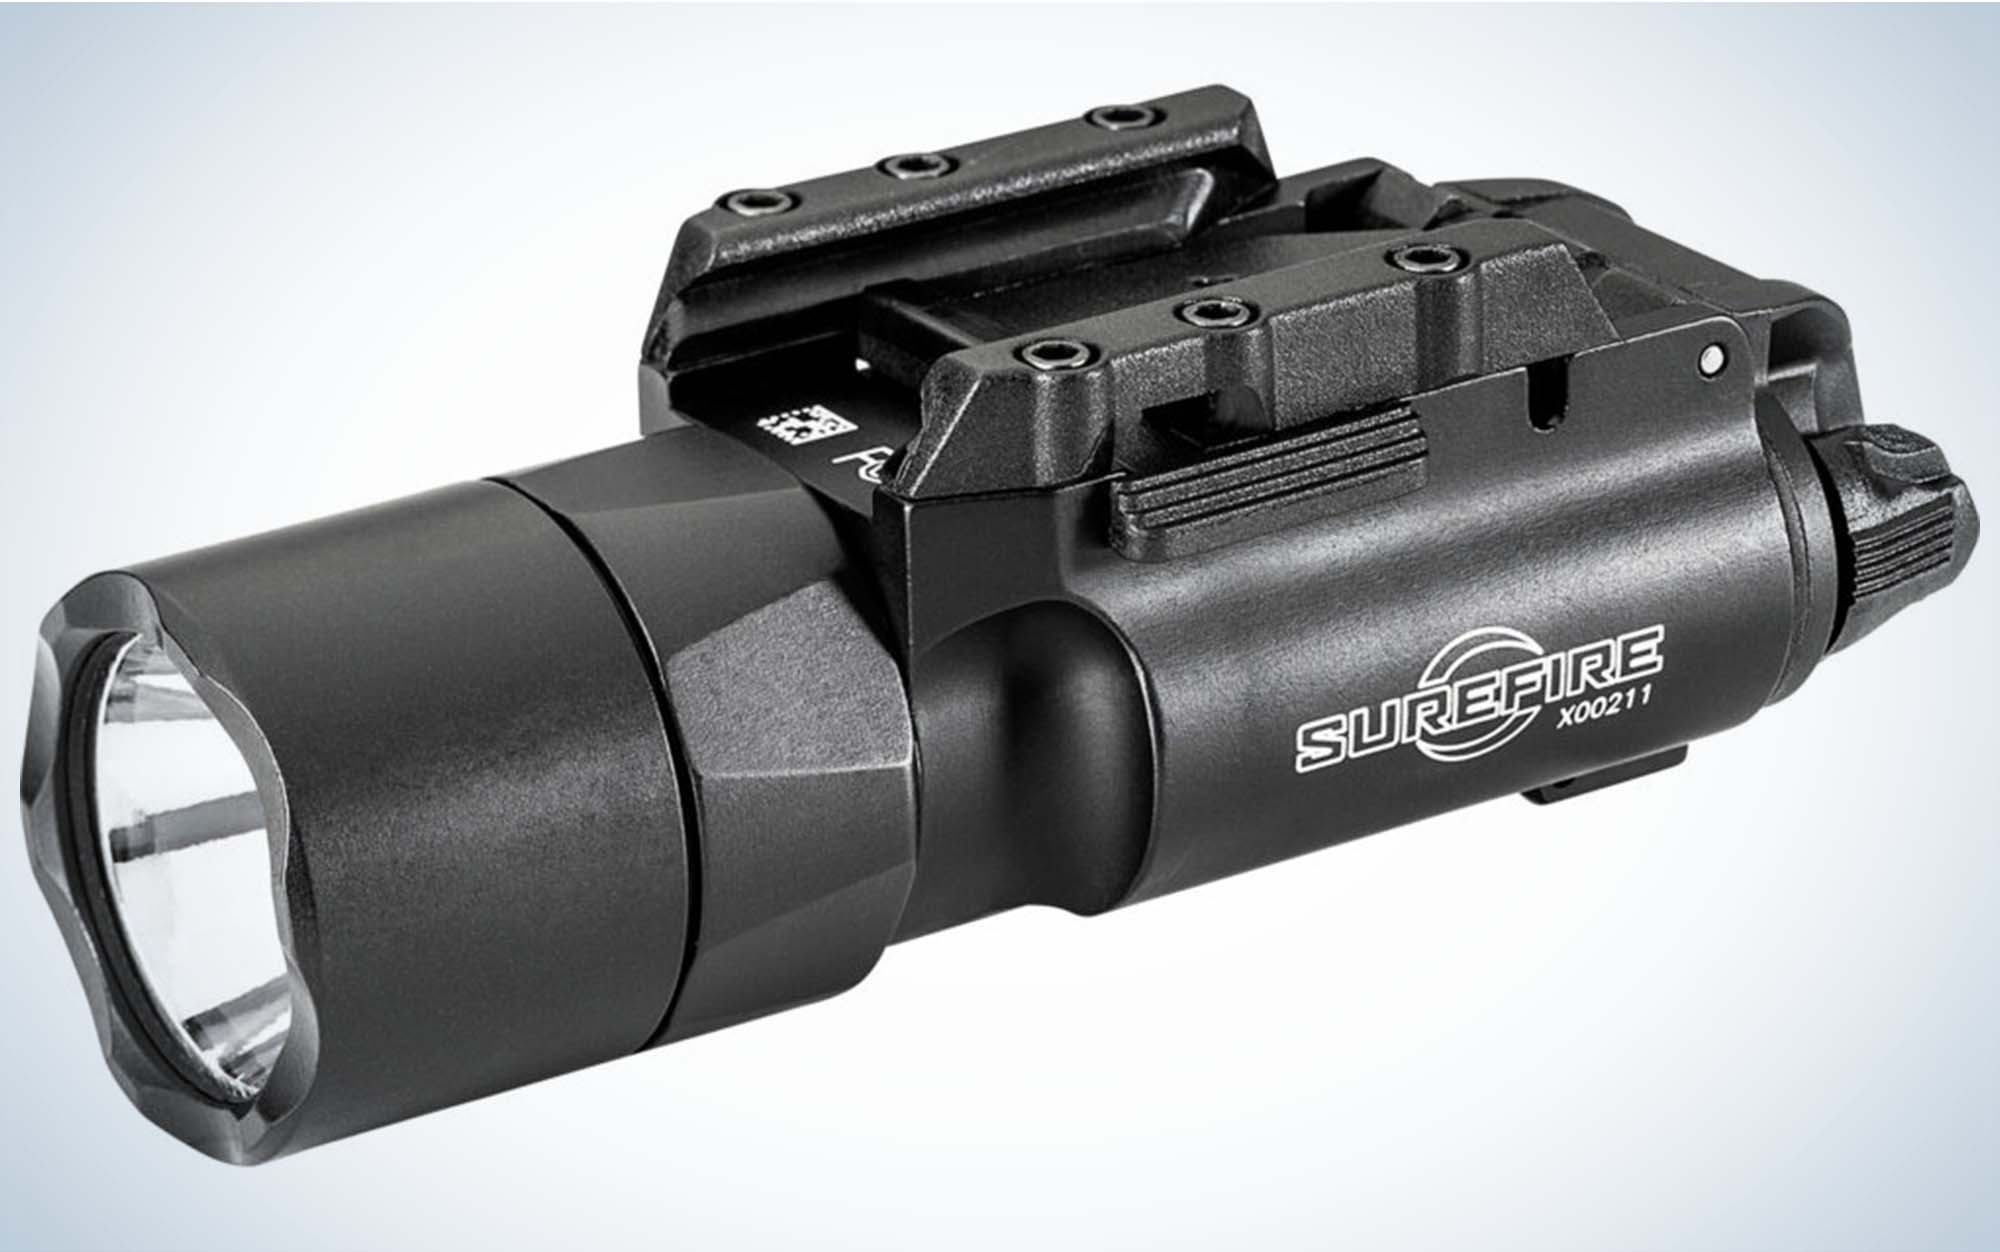 The Surefire X300T-A Turbo is the best pistol light for long-range.